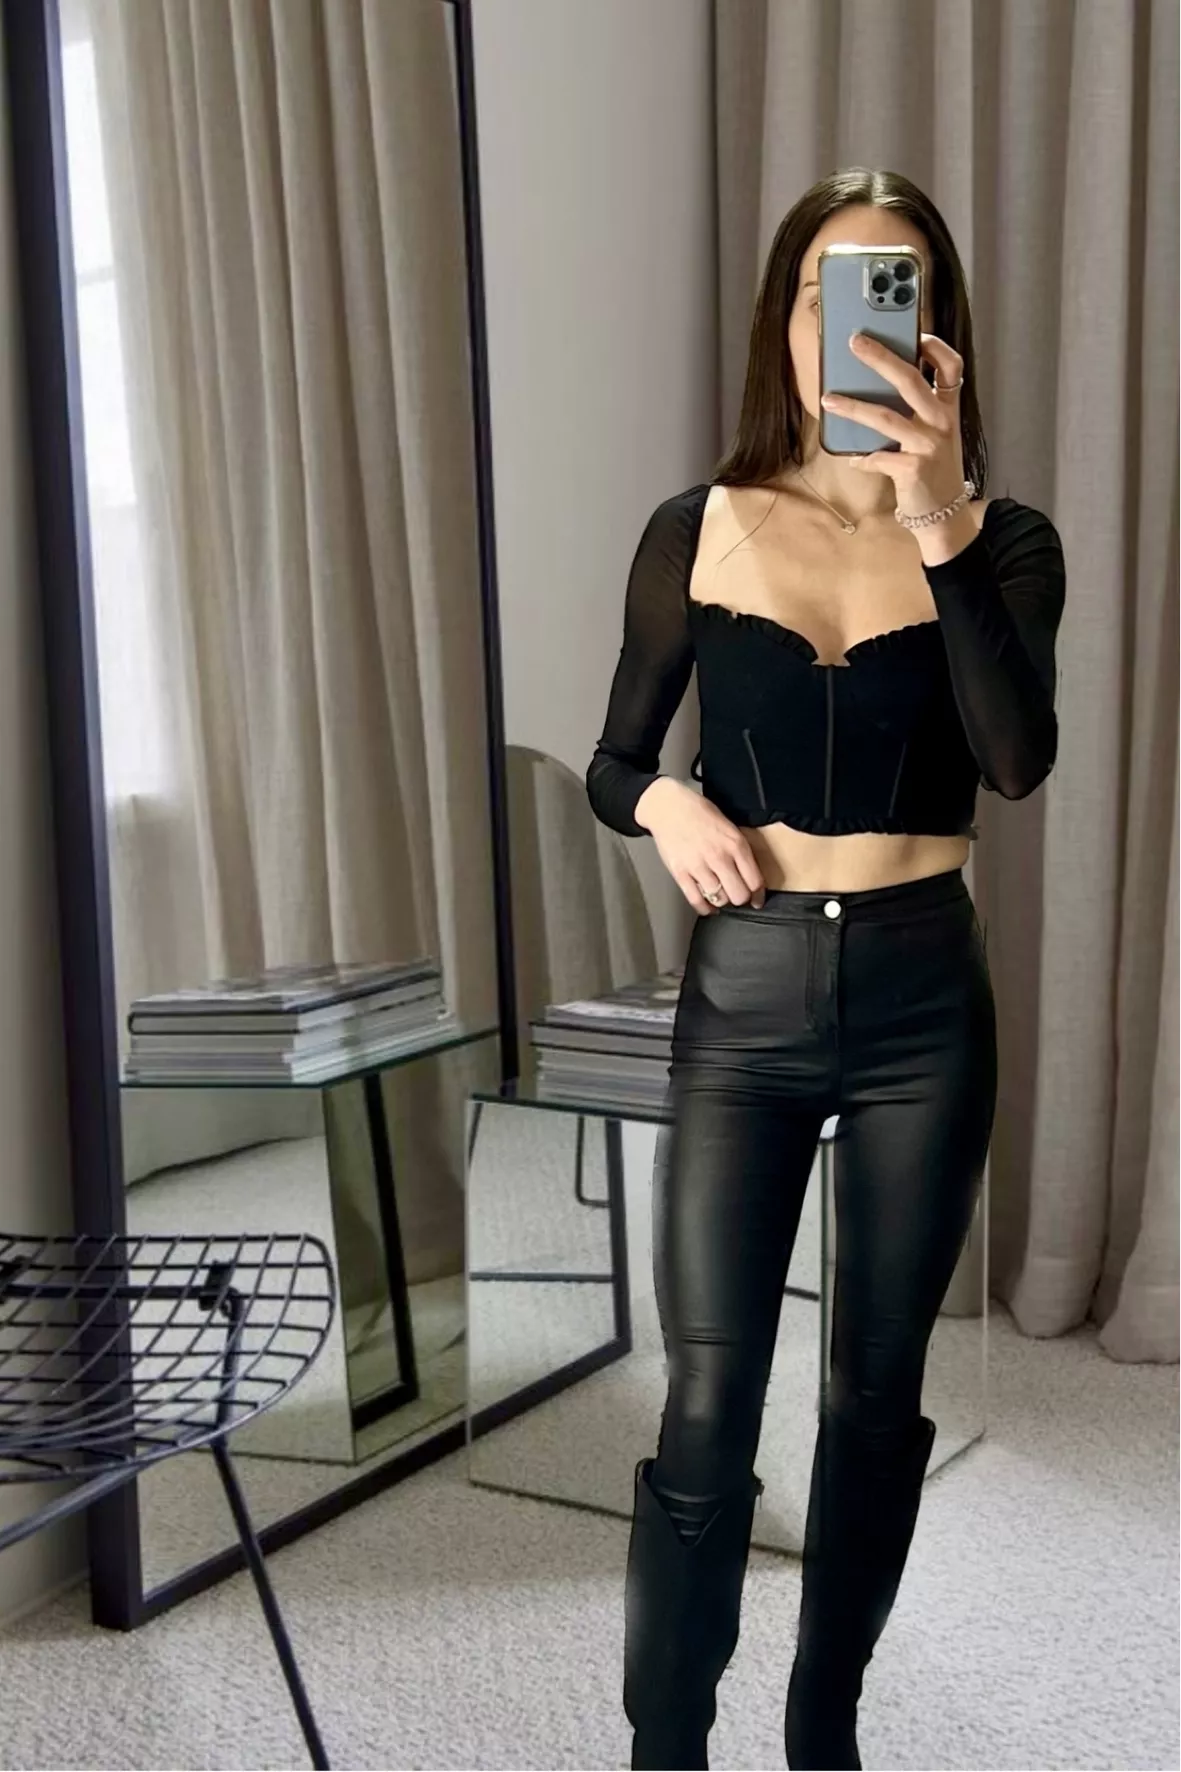 Restocked 🖤 Bratz Bodysuit & That Girl Faux Leather Pants Model